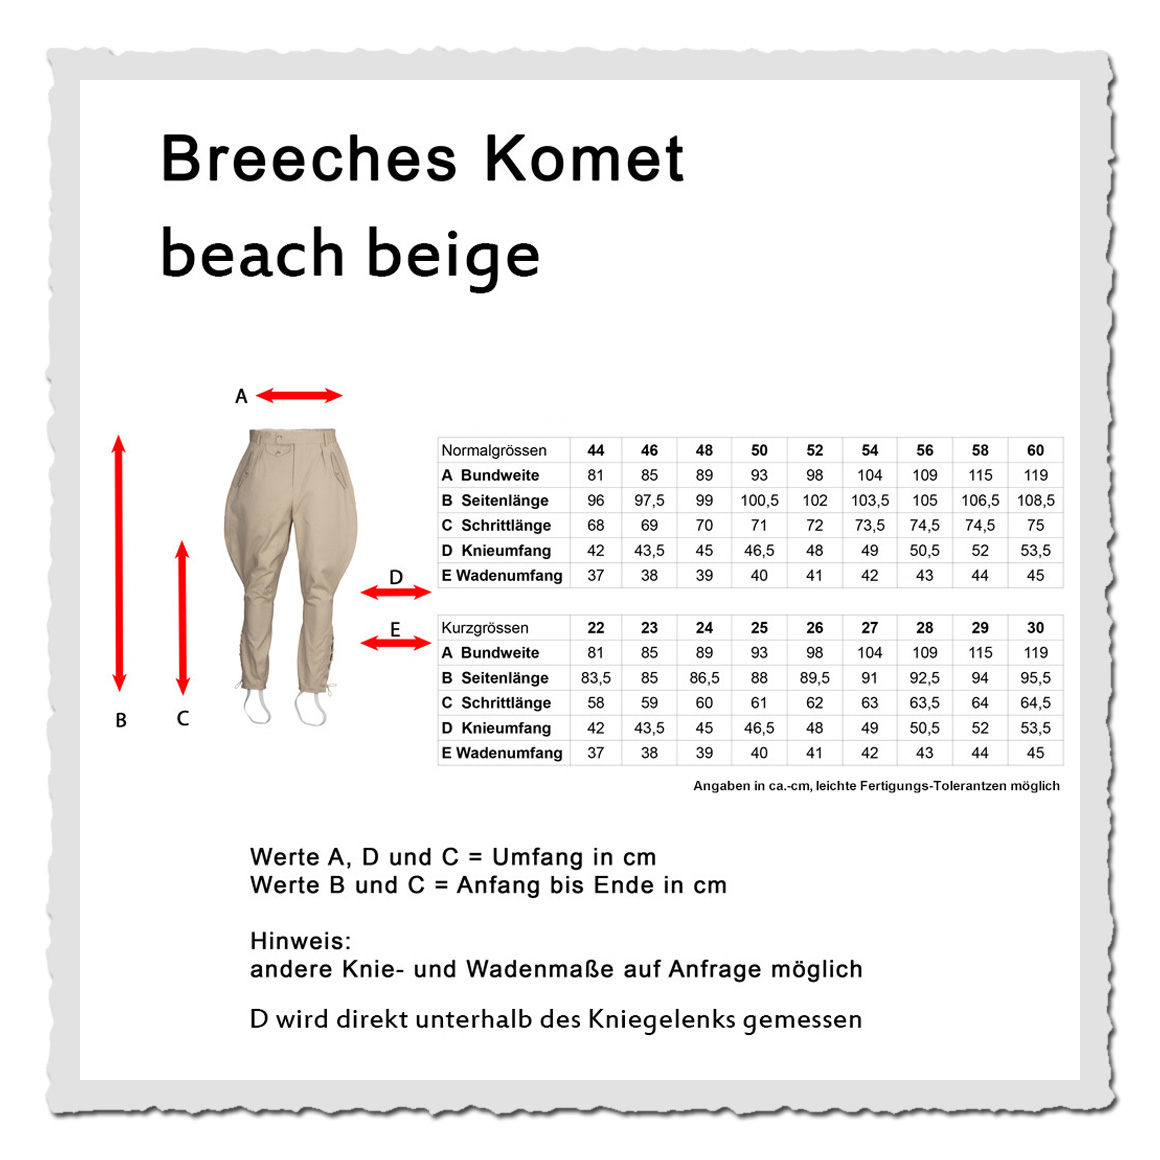 Breeches Komet beach beige